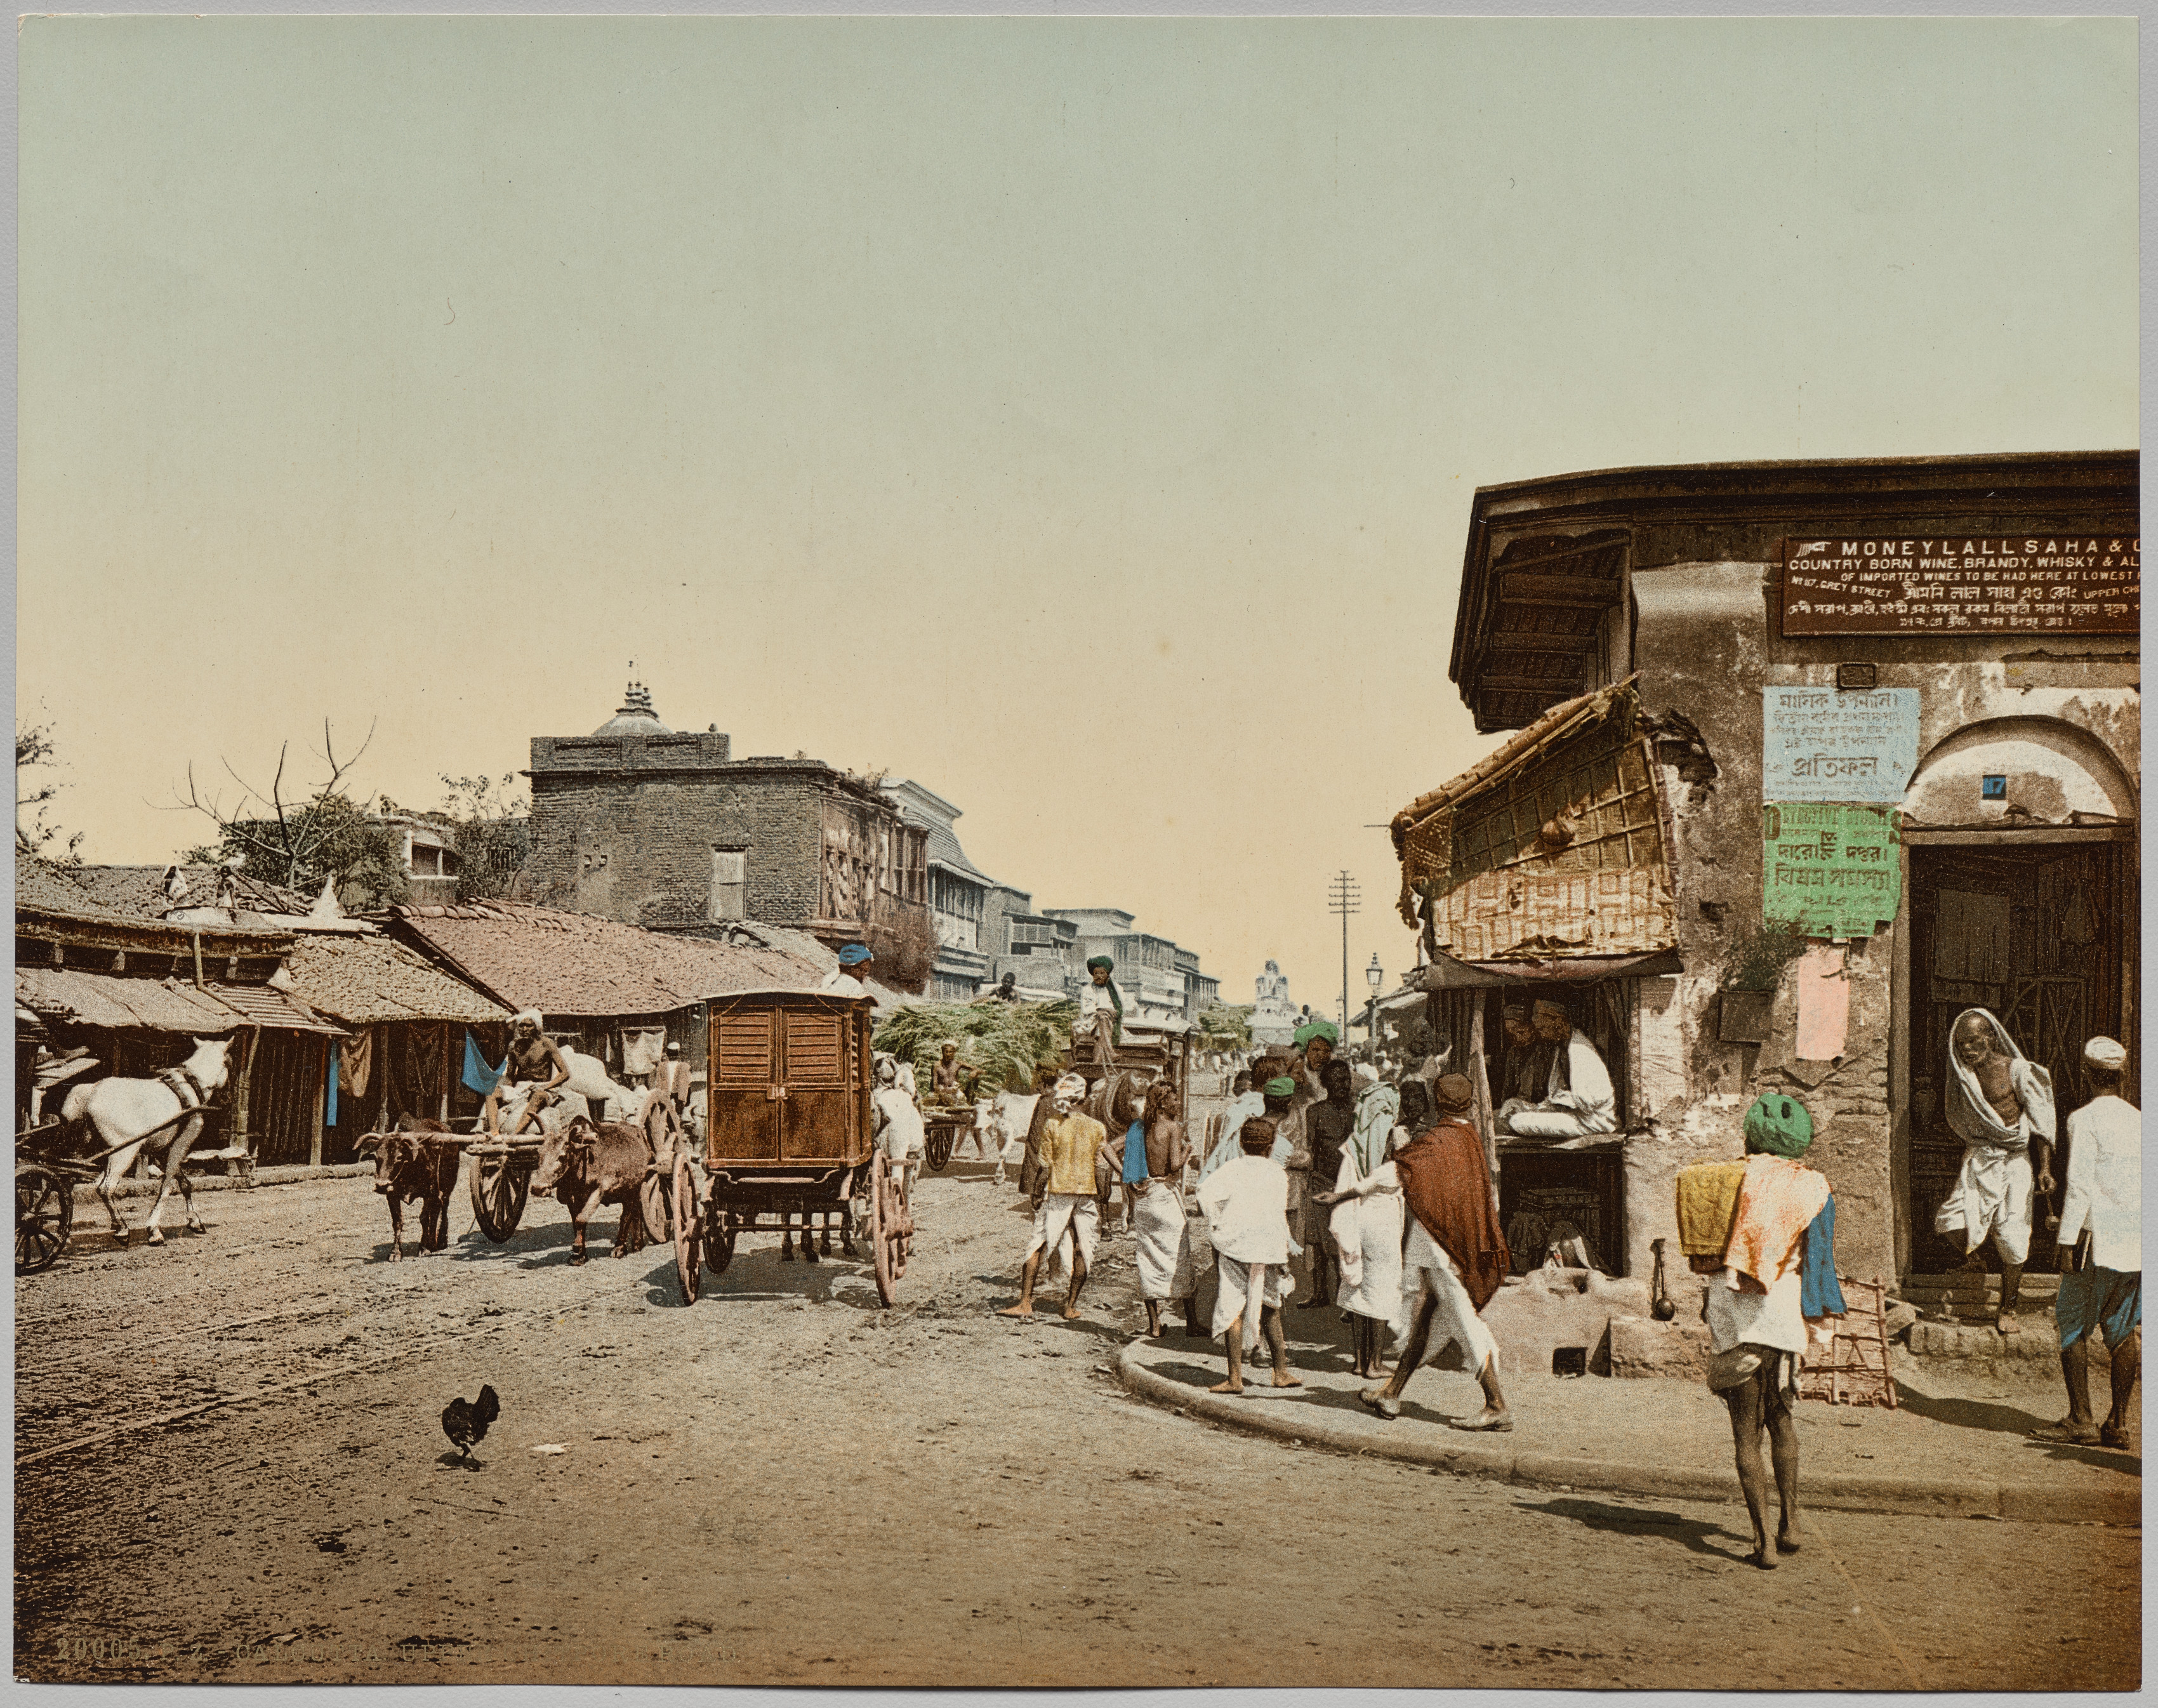 India. Calcutta. Upper Chitpore Road (A), after photo by Dr. Kurt Boeck